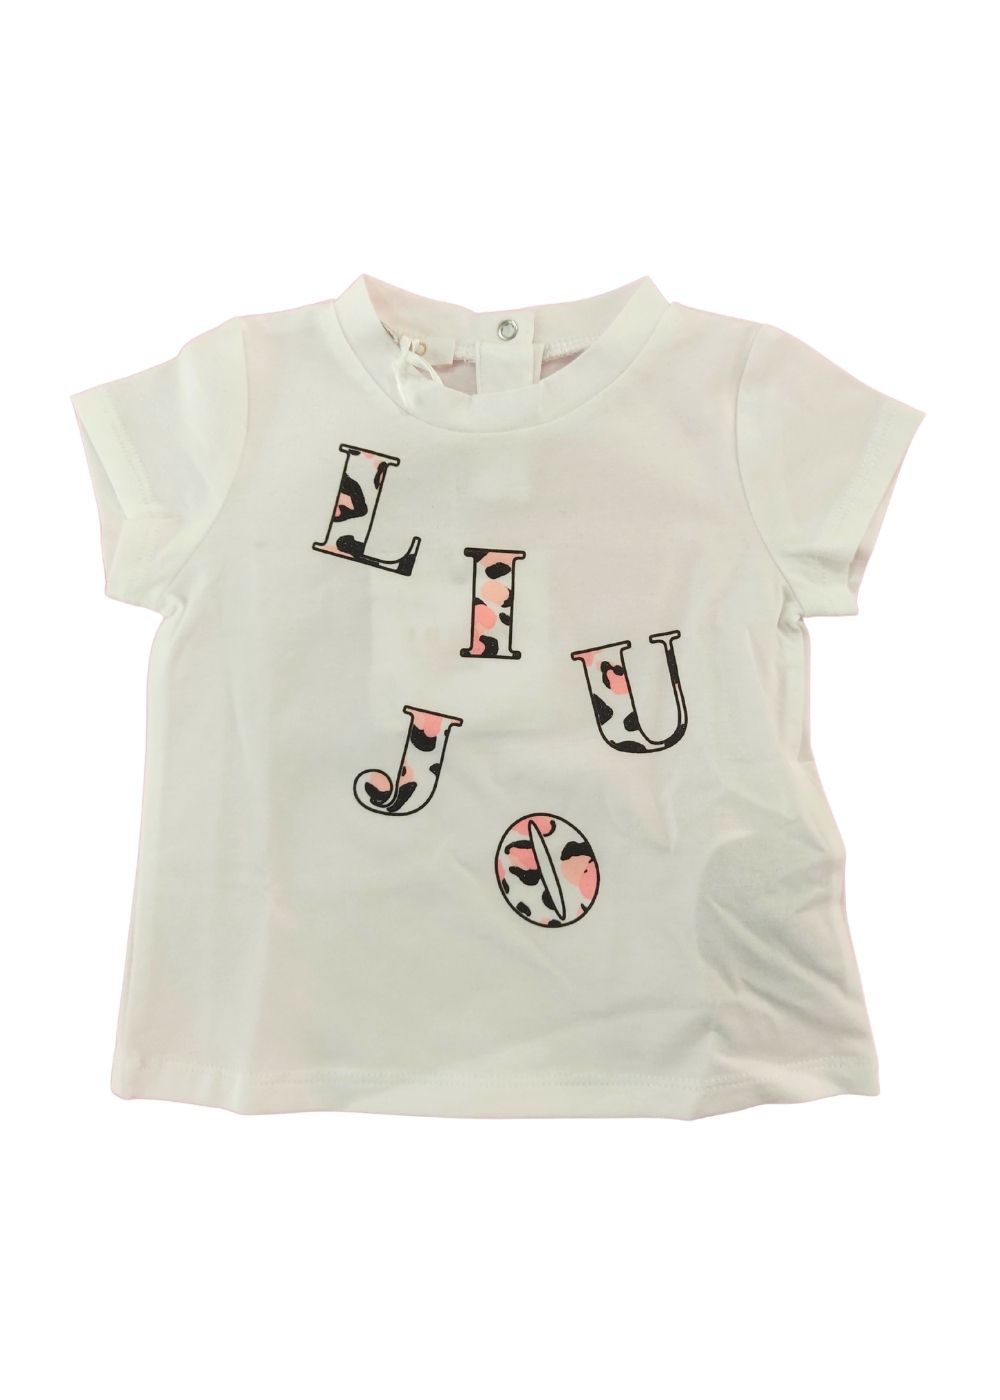 Featured image for “Liu Jo T-shirt Neonata”